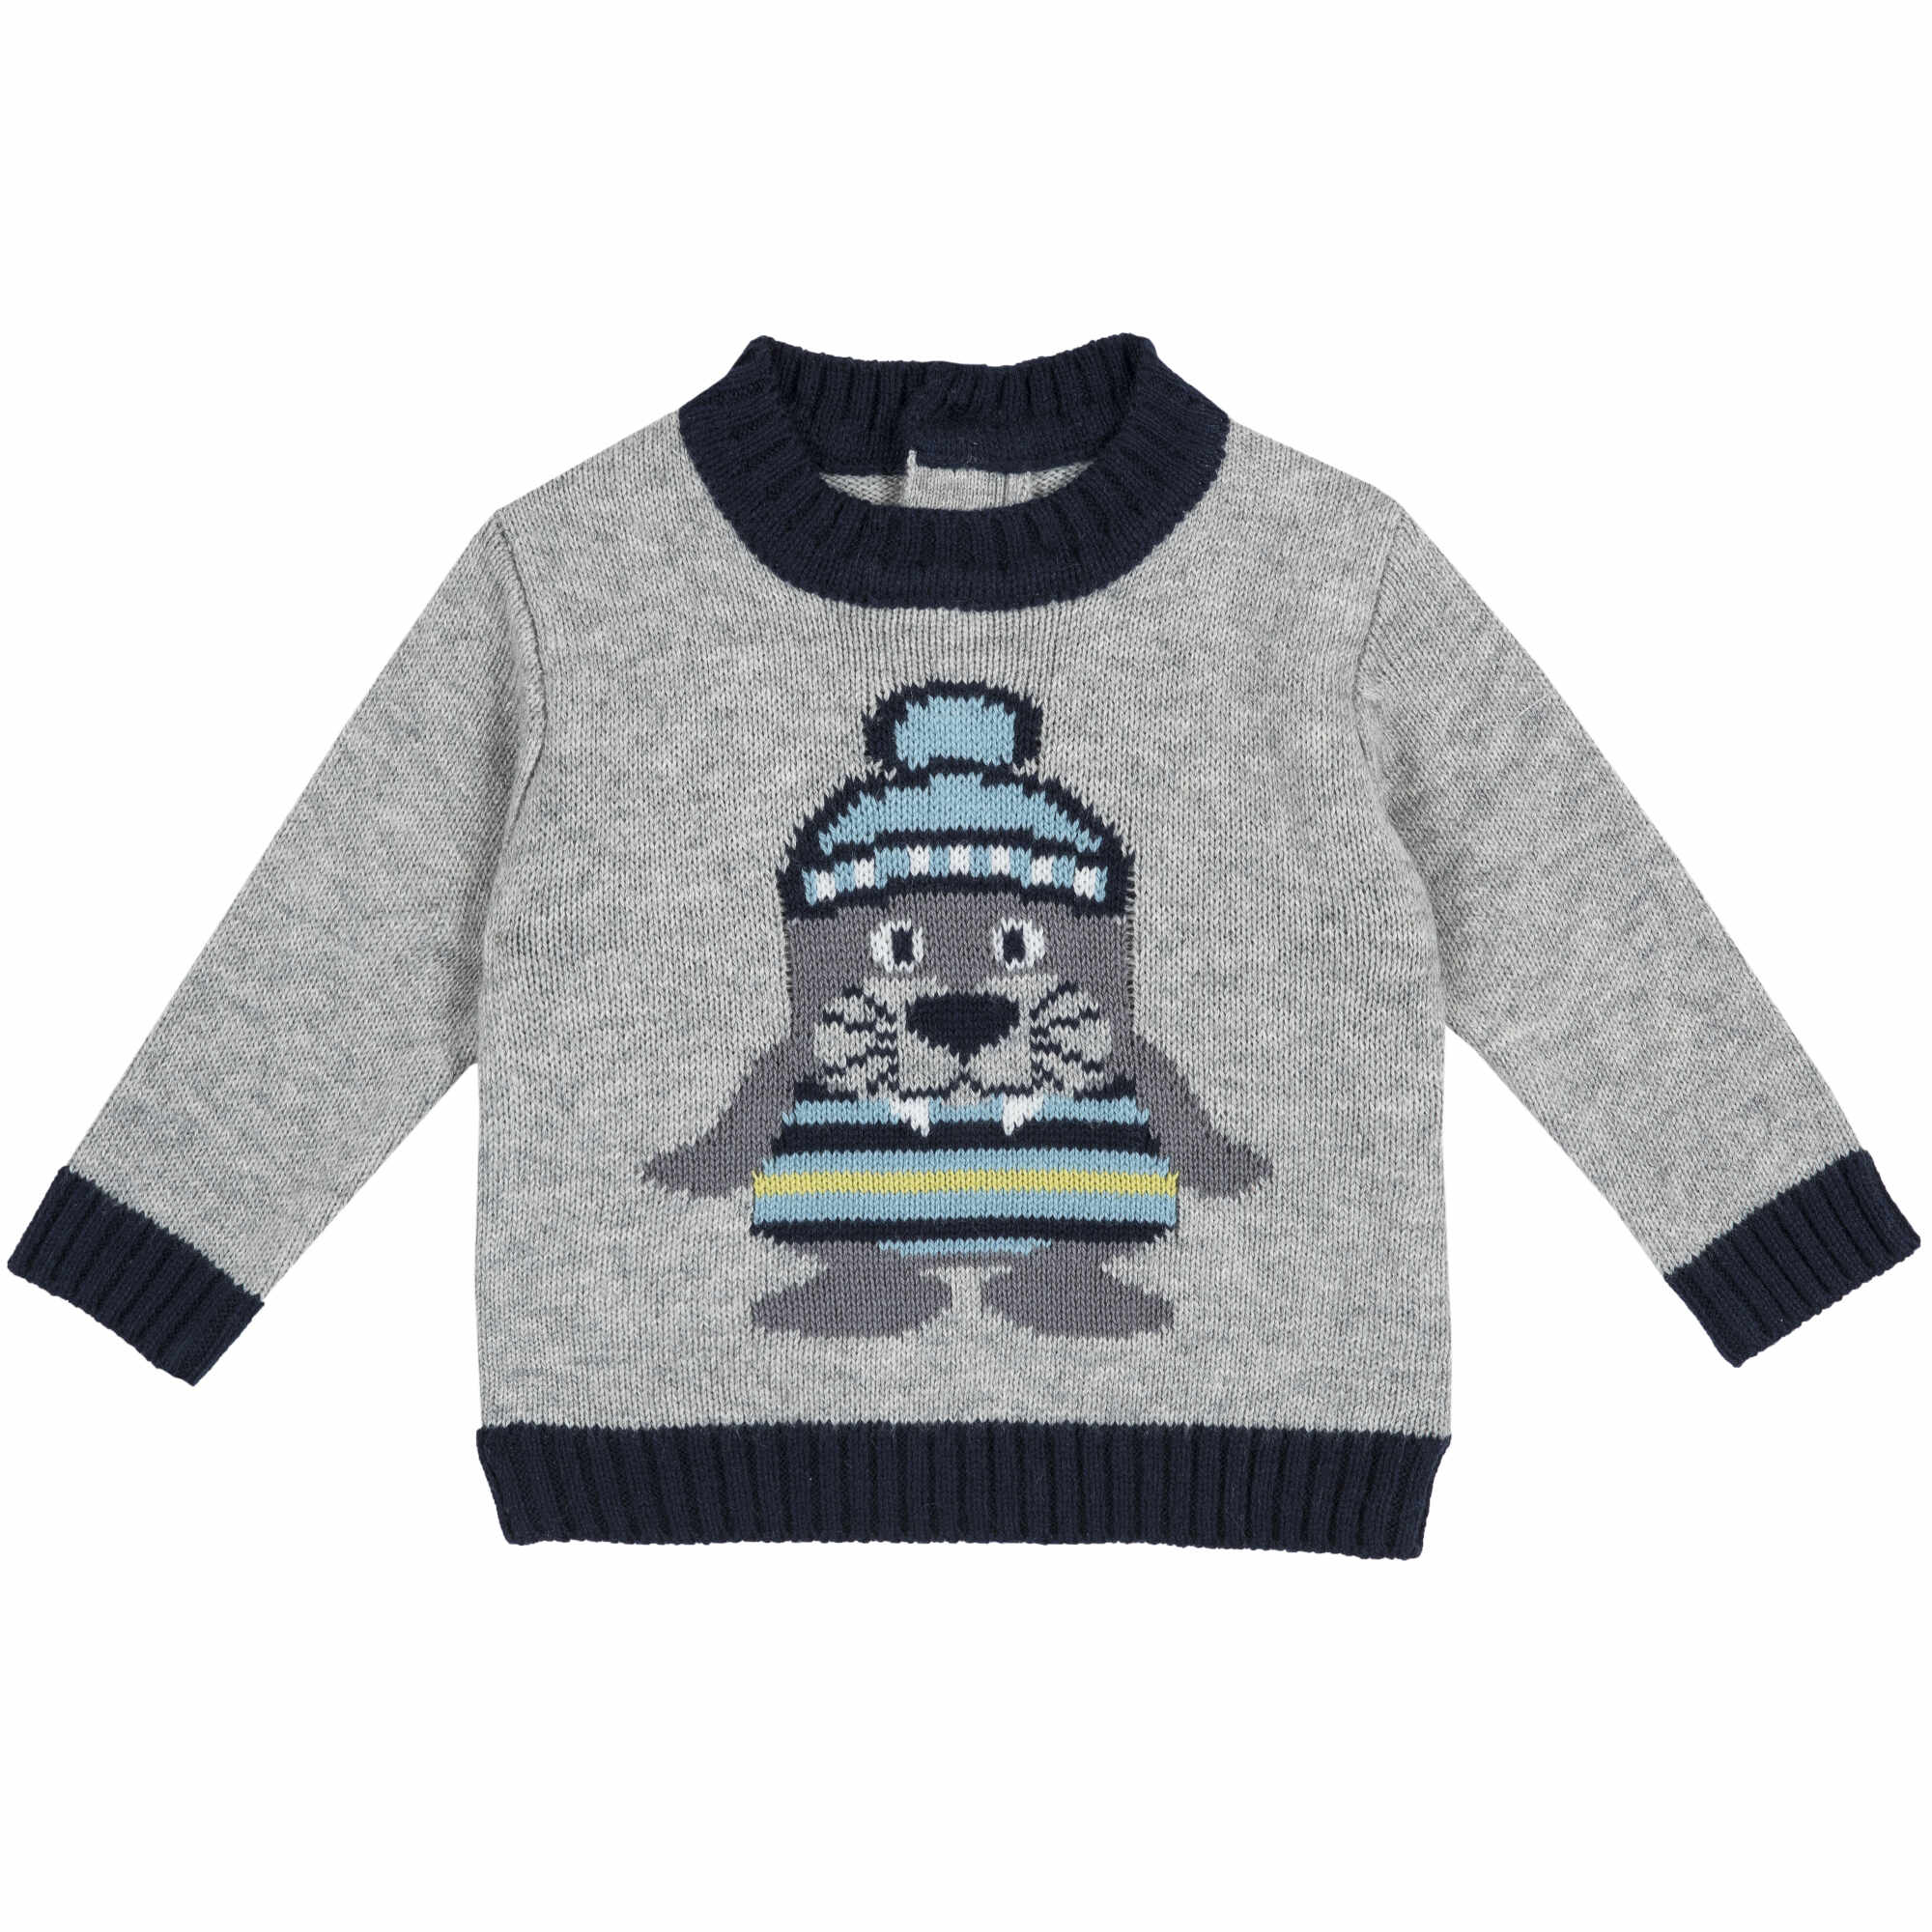 Pulover copii Chicco, tricotat, imprimeu animale, 69382